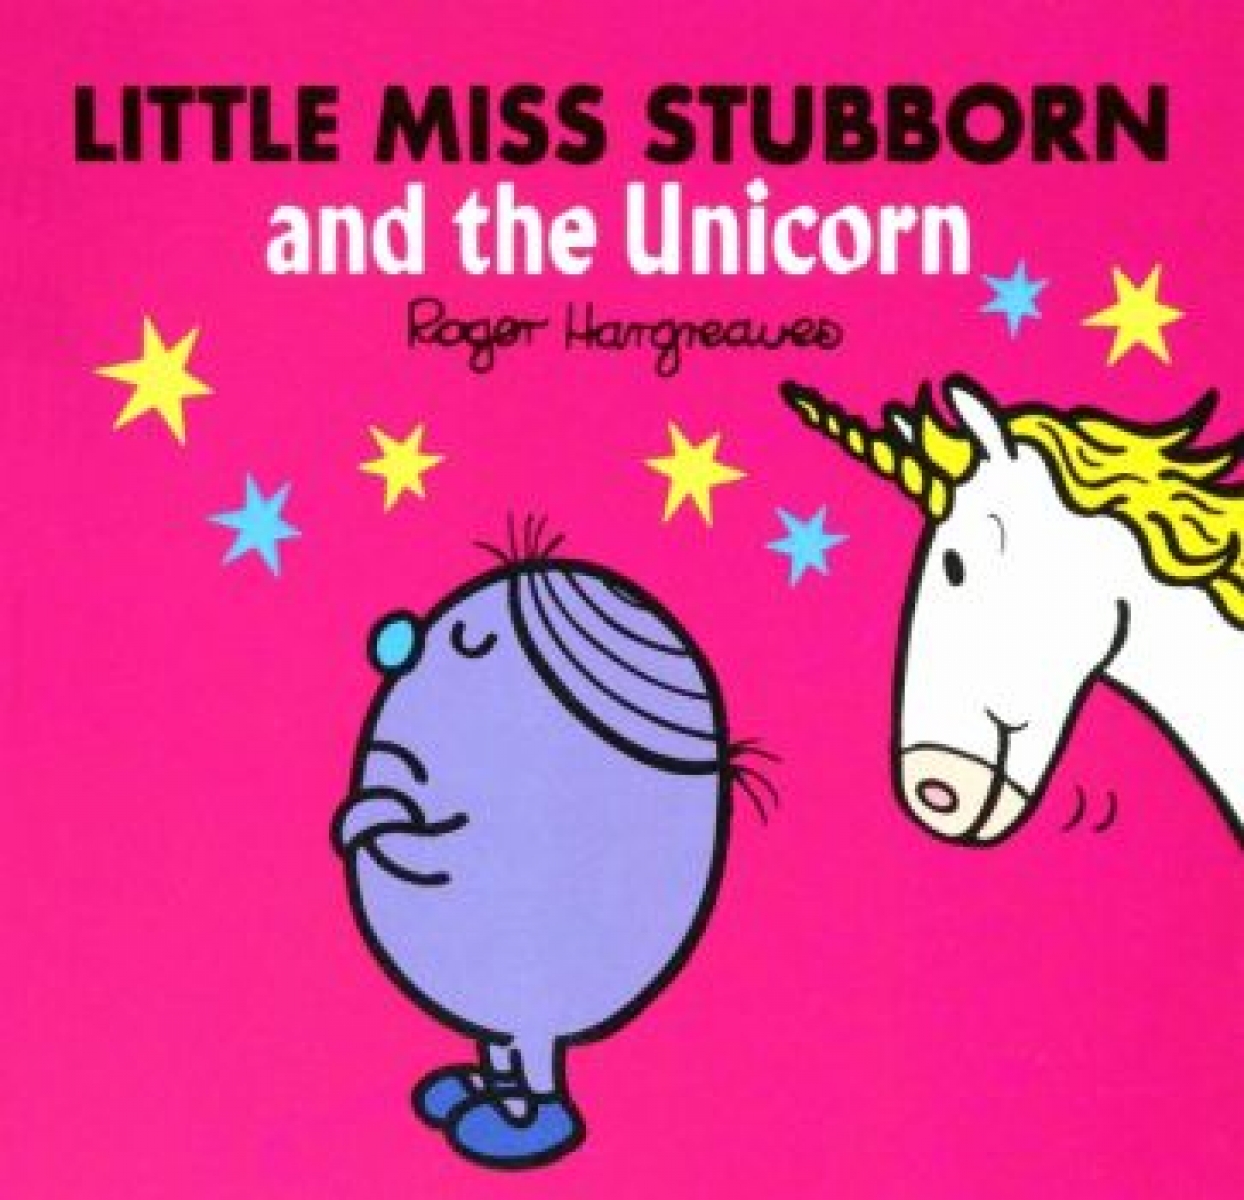 Hargreaves Adam Little Miss Stubborn and the Unicorn 